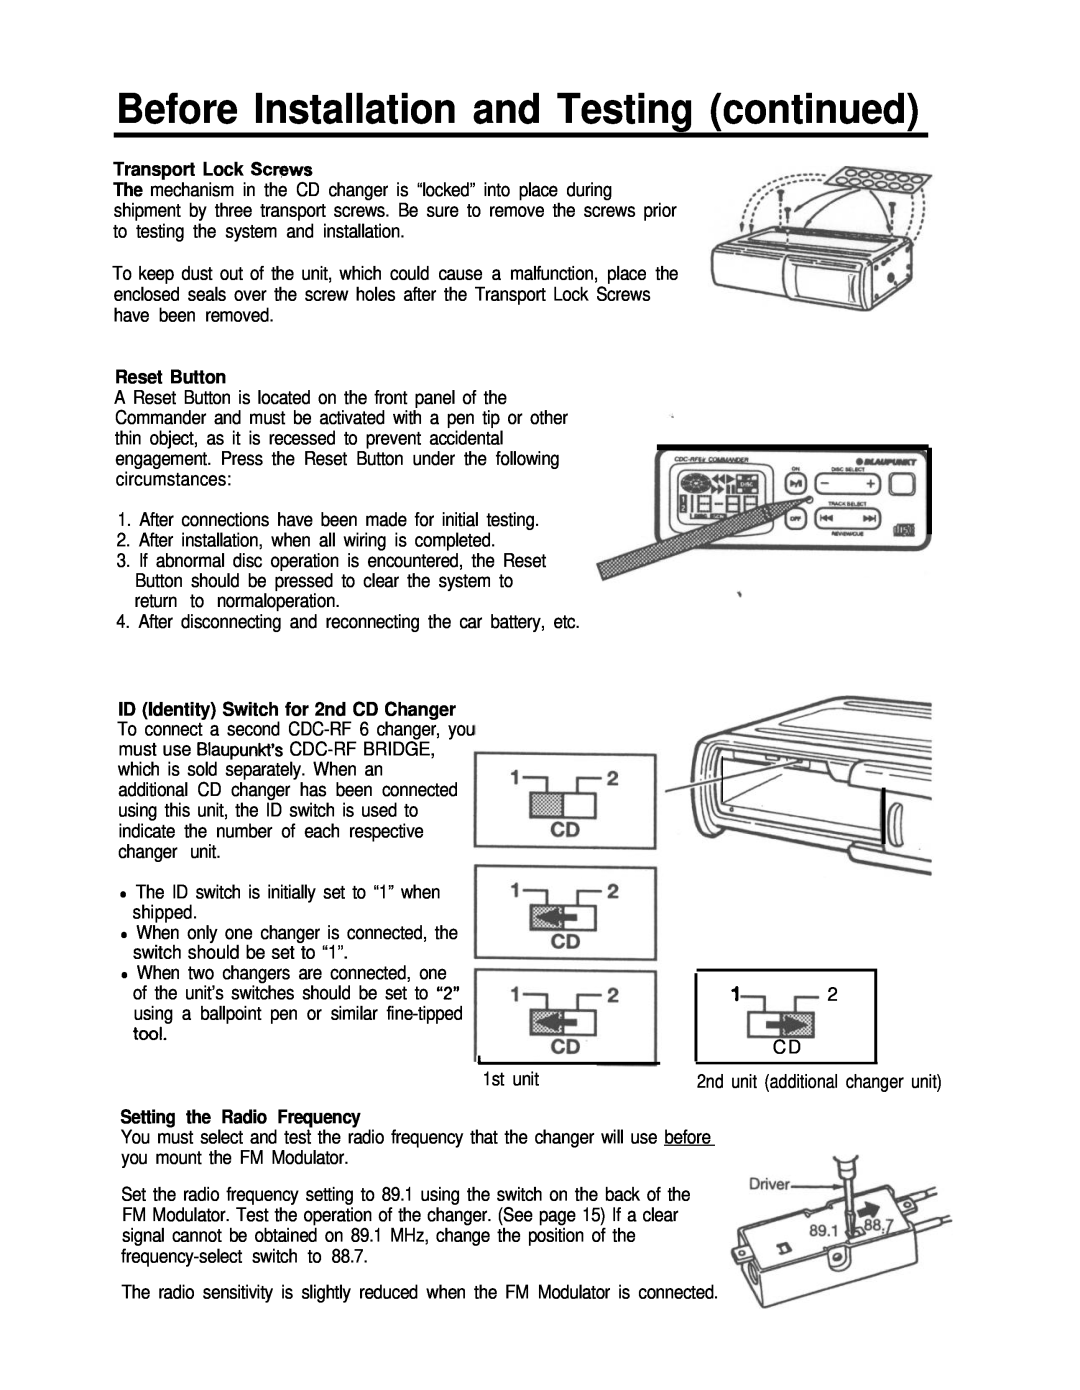 Blaupunkt CDC-RF6IR manual Before Installation and Testing continued, Transport Lock SCWWS, Reset Button 